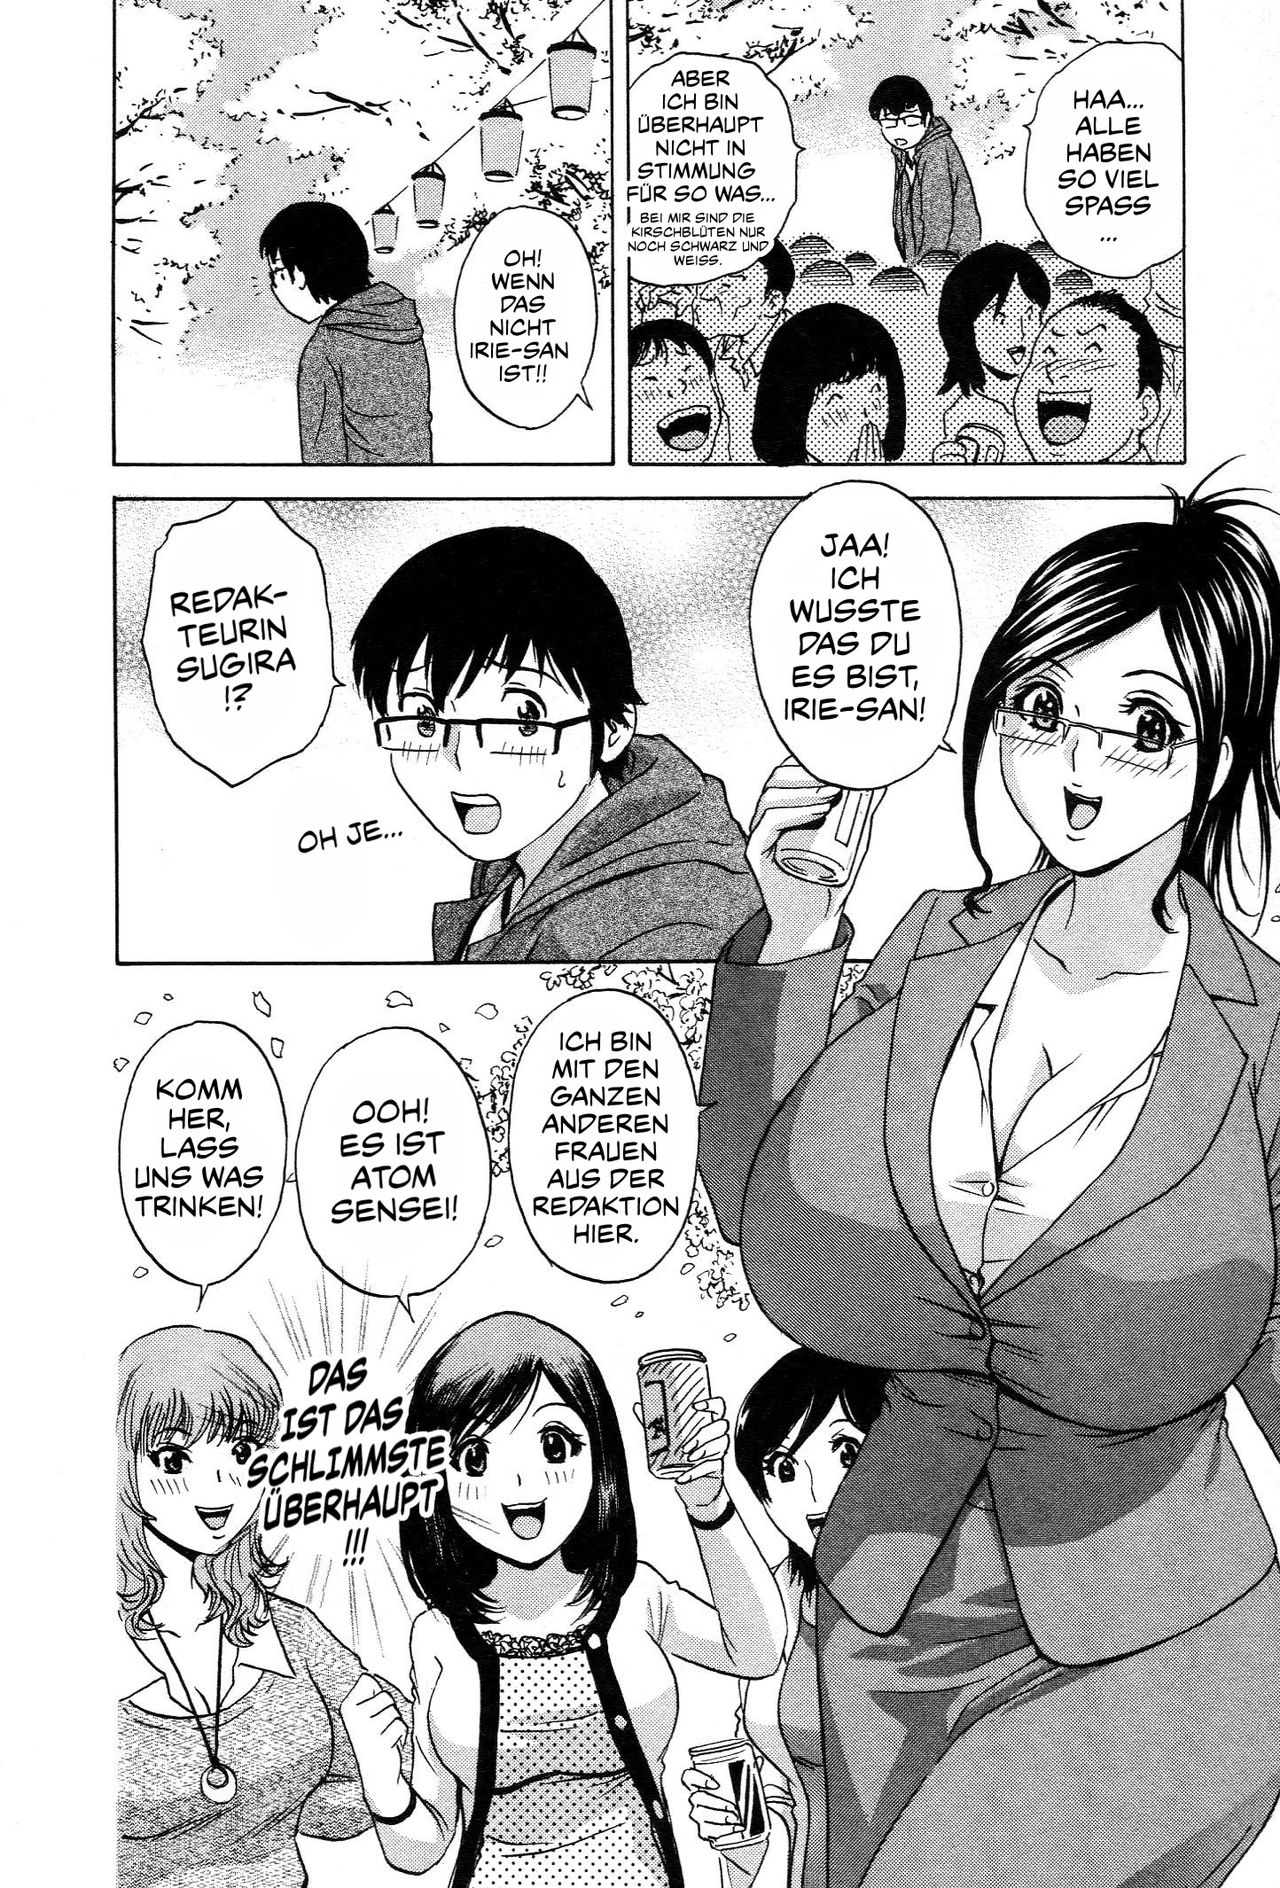 [Hidemaru] Eroina Hitoduma - Manga no youna Hitozuma to no Hibi 2 | Life with Married Women Just Like a Manga 2 [German] [SchmidtSST] 67